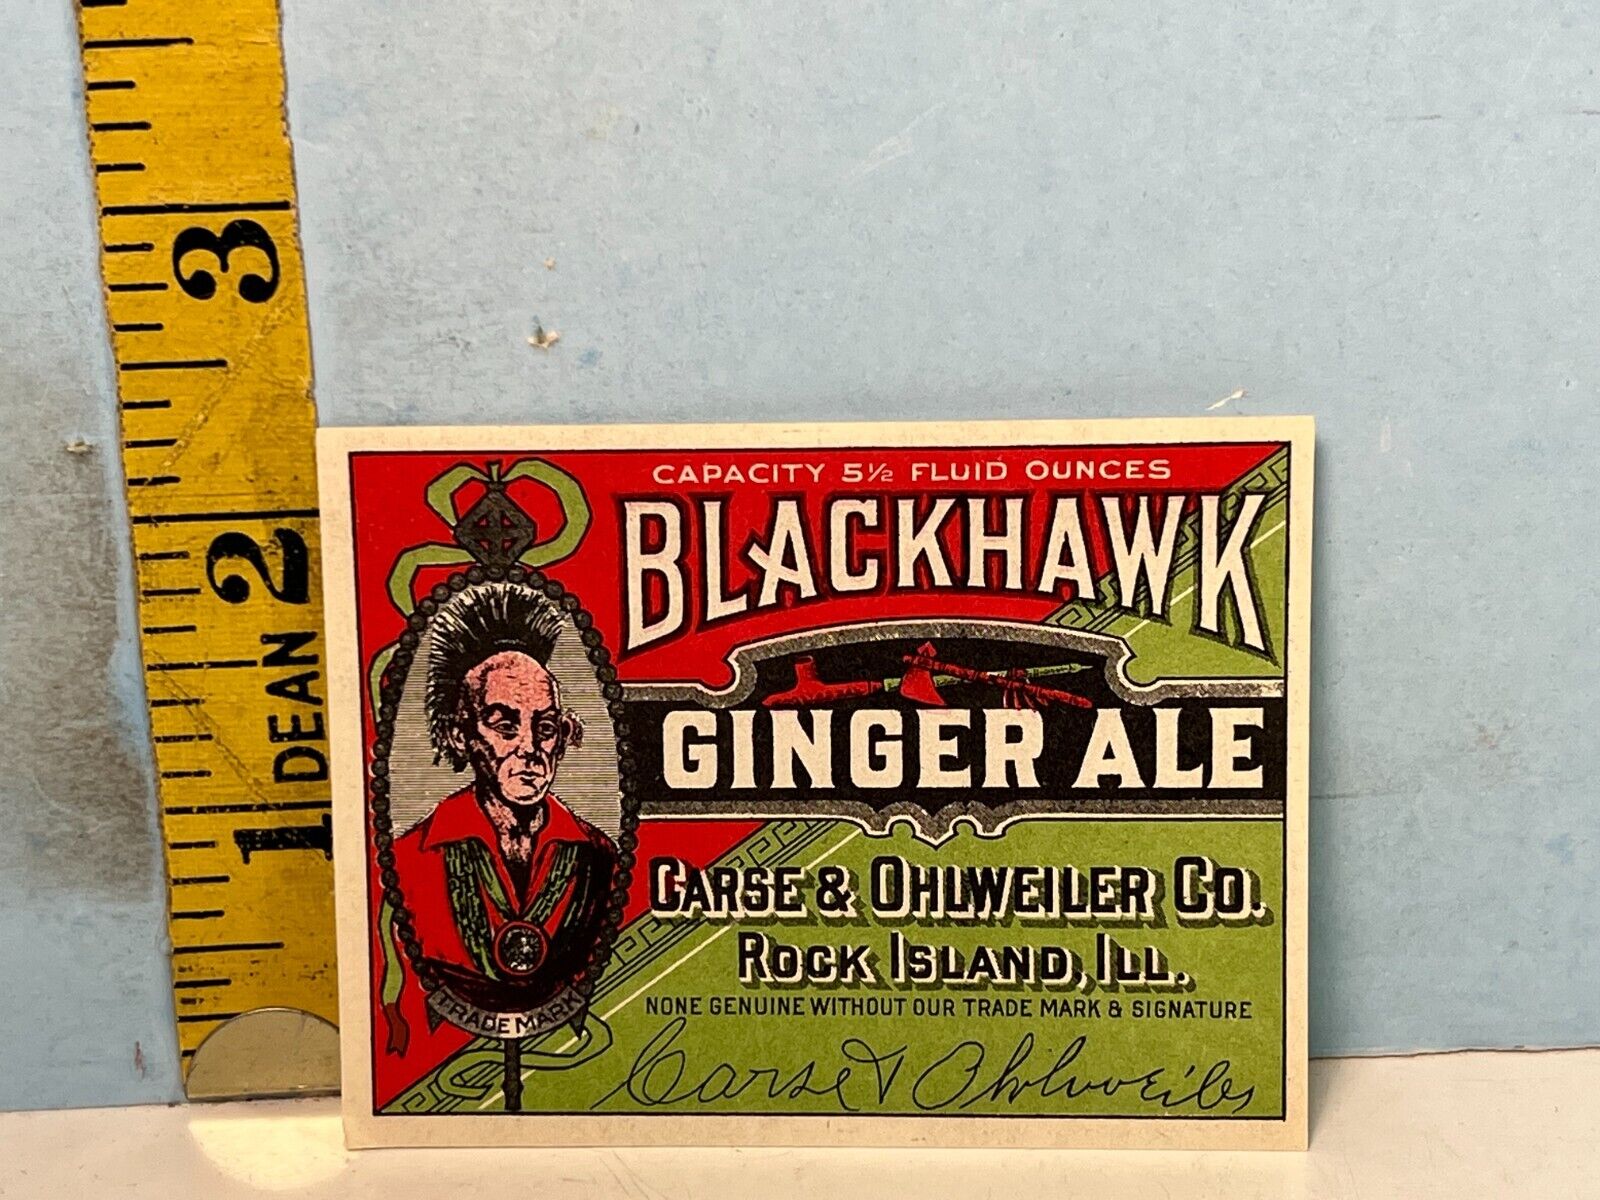 Blackhawk Ginger Ale, Garse & Ohluweiler Co Rock Island Crate Product Label.